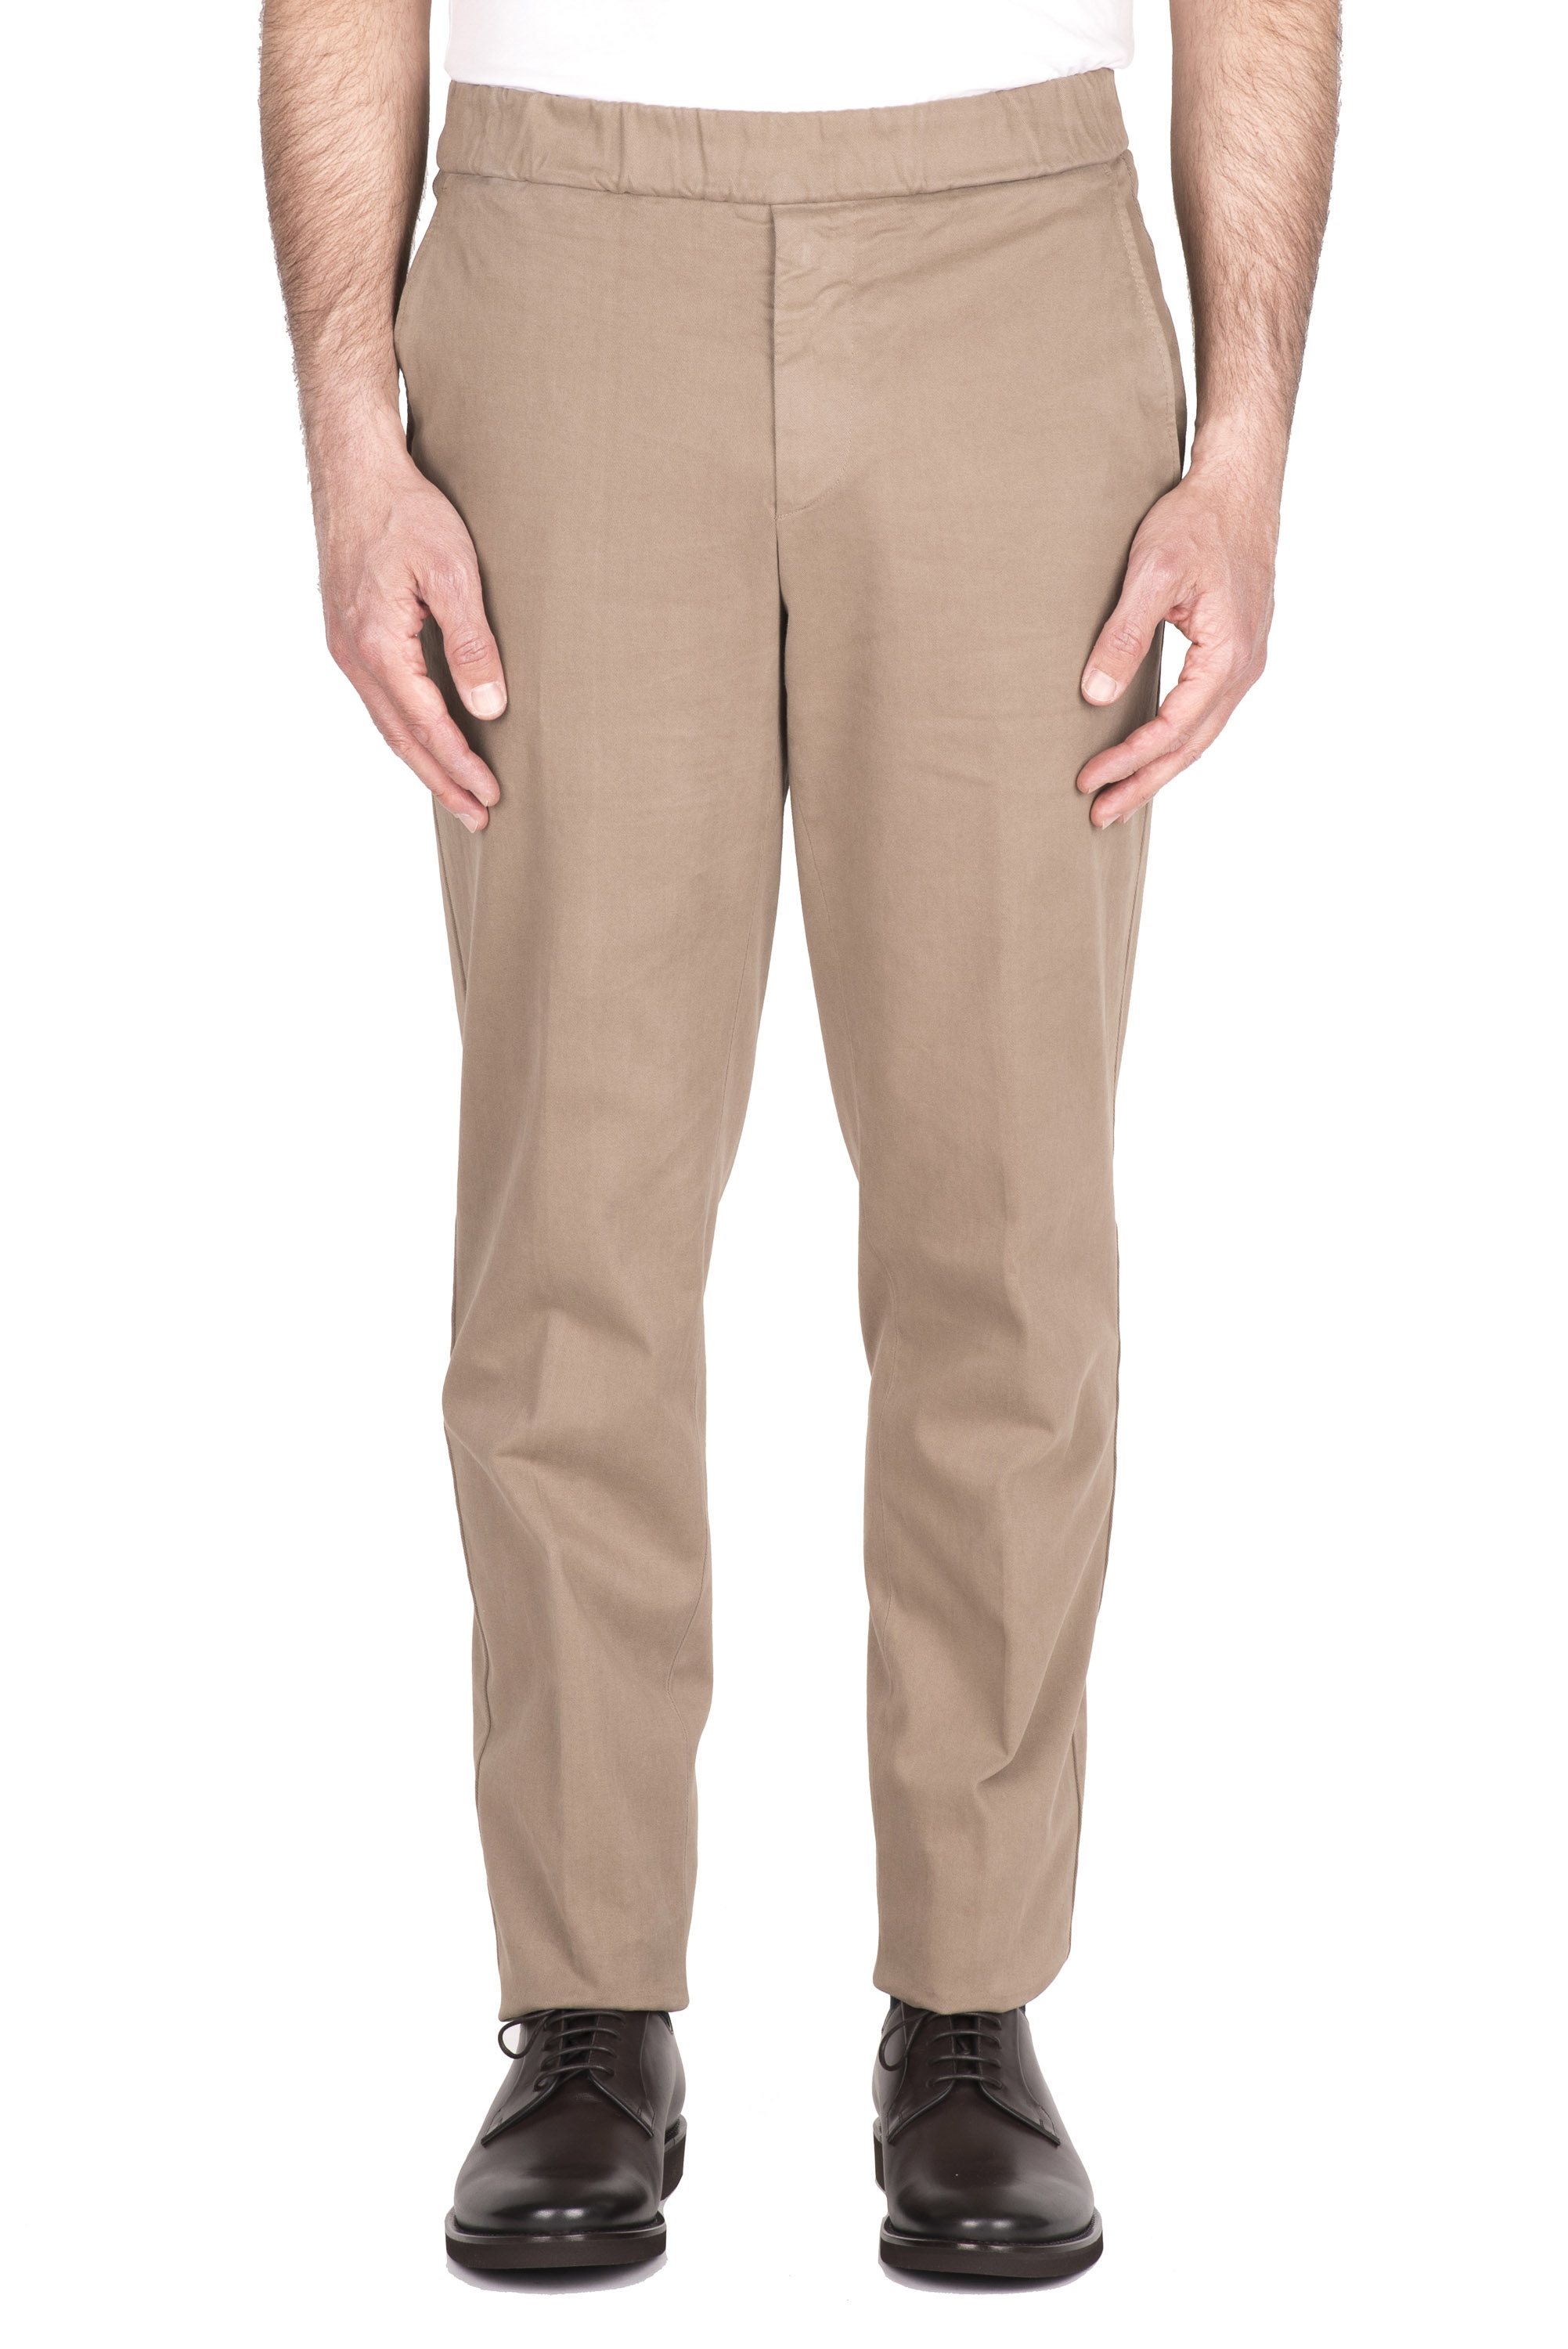 SBU 04621_23AW Pantalón confort de algodón elástico beige 01